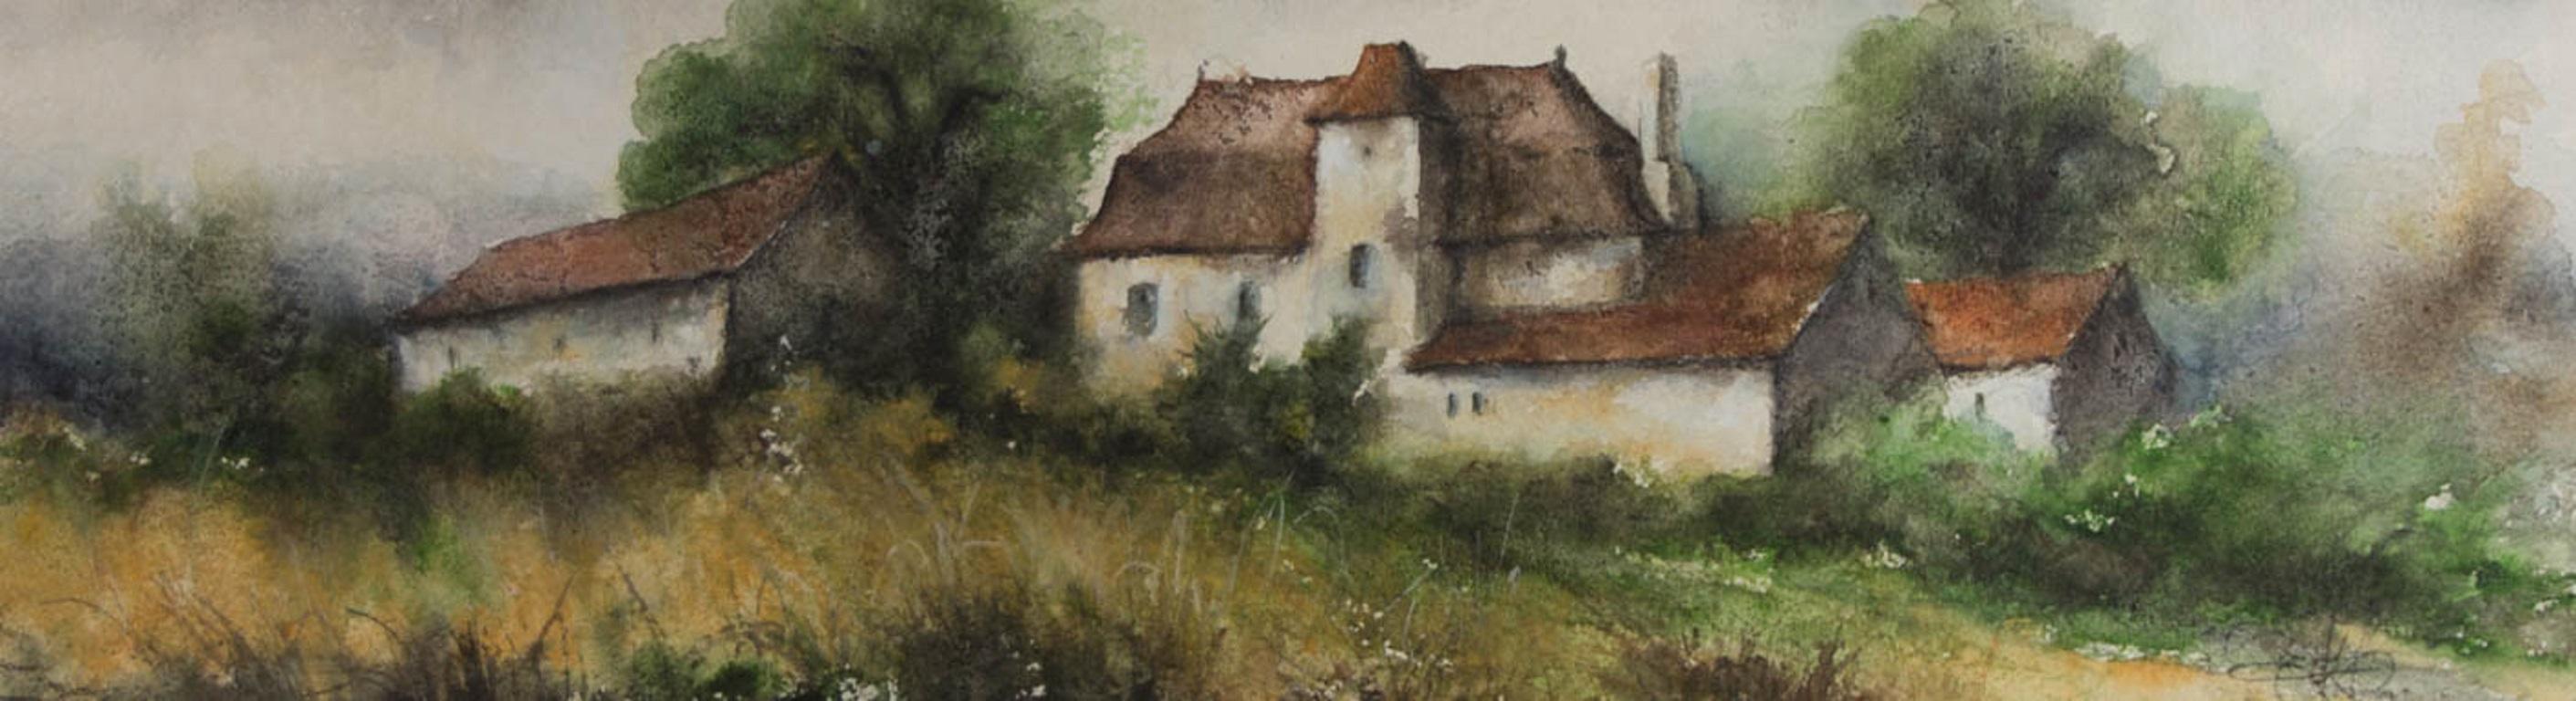 Unknown Landscape Art - 20th Century Watercolour - French Farmstead